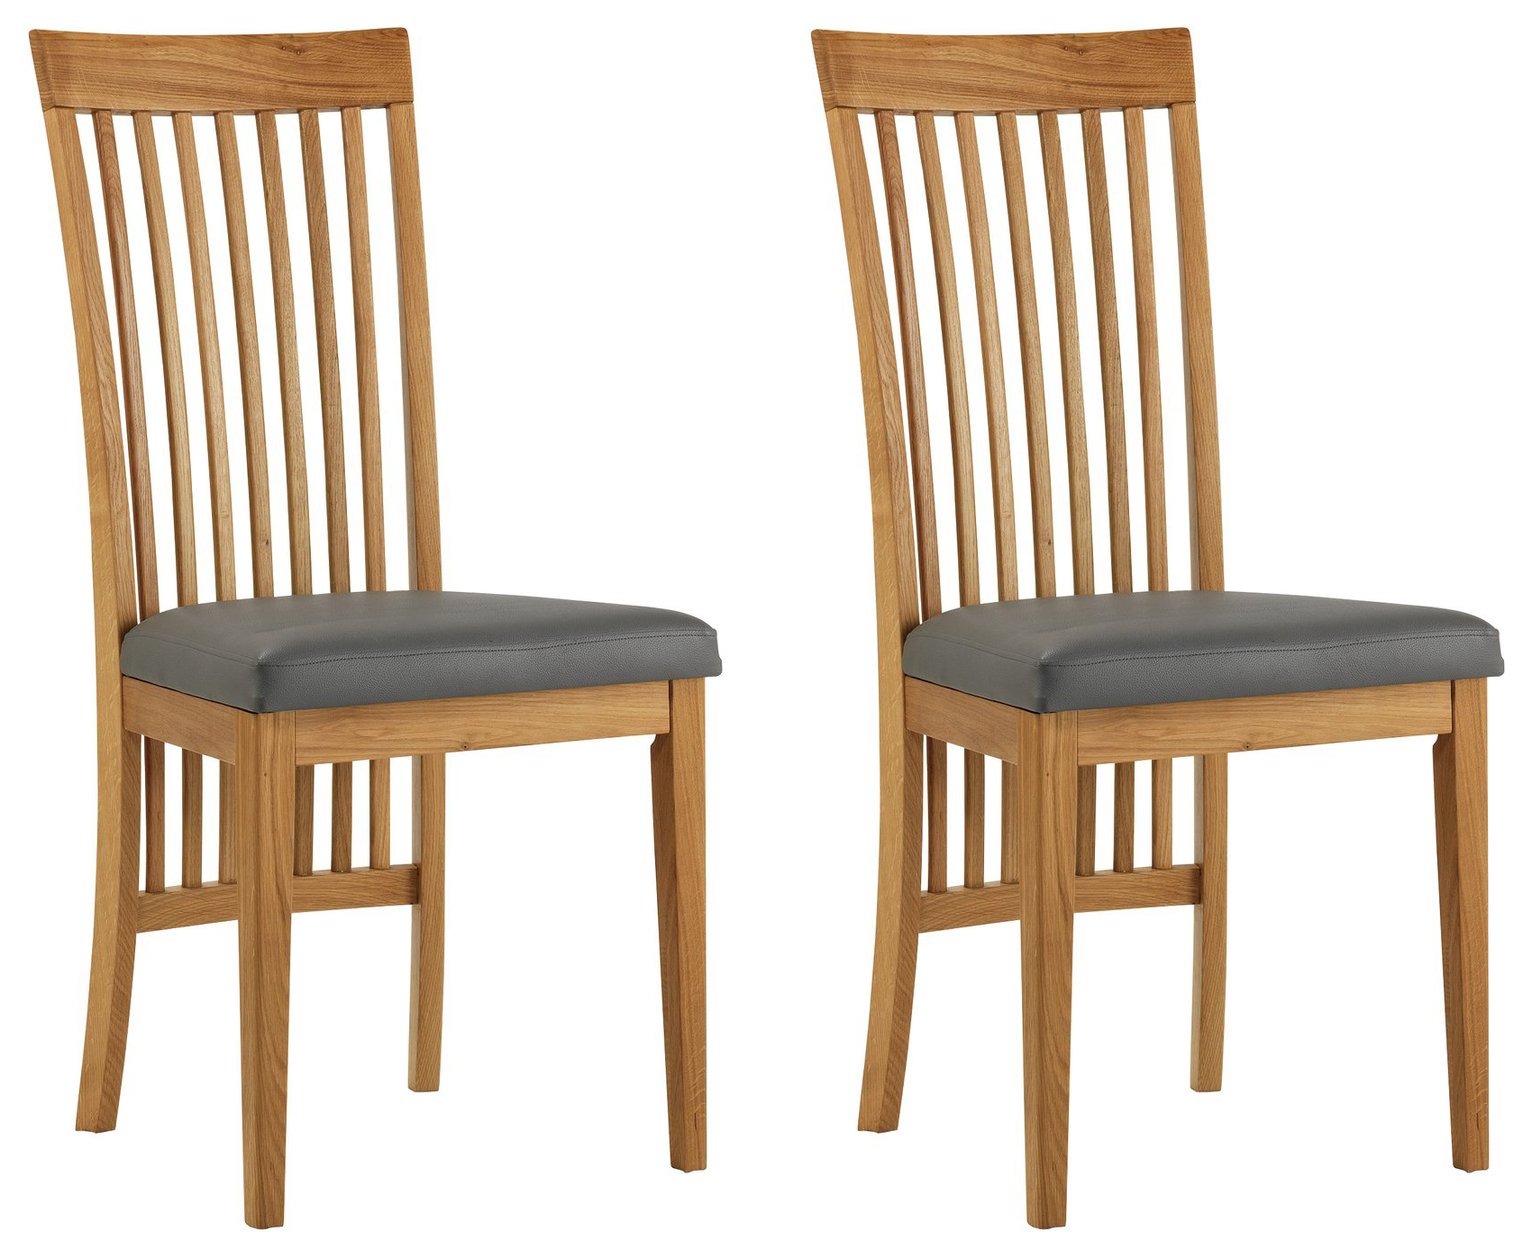 Argos Home Pembridge Pair of Slatted Chairs - Grey